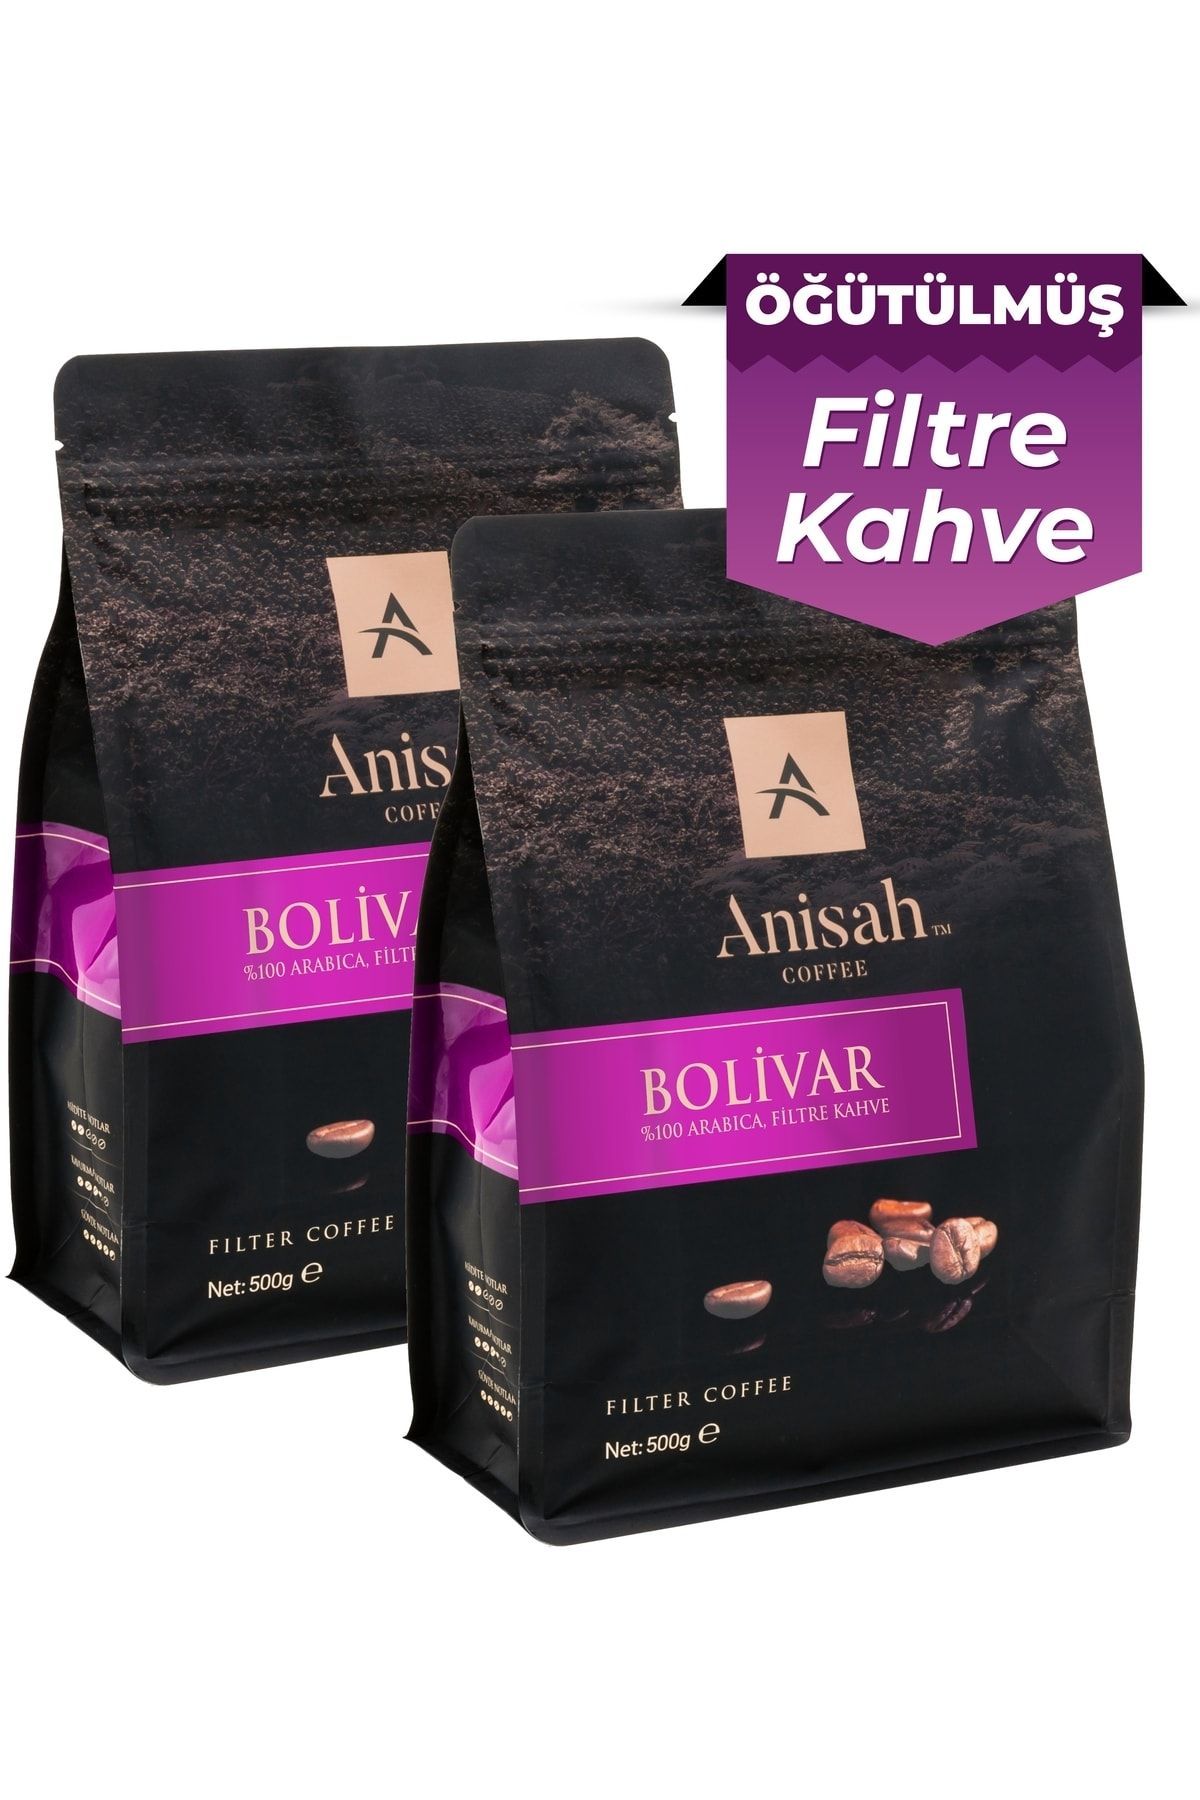 Anisah Coffee Bolivar Daily | Öğütülmüş Filtre Kahve | 2x500g | Orta Kavrulmuş (MEDİUM ROAST)